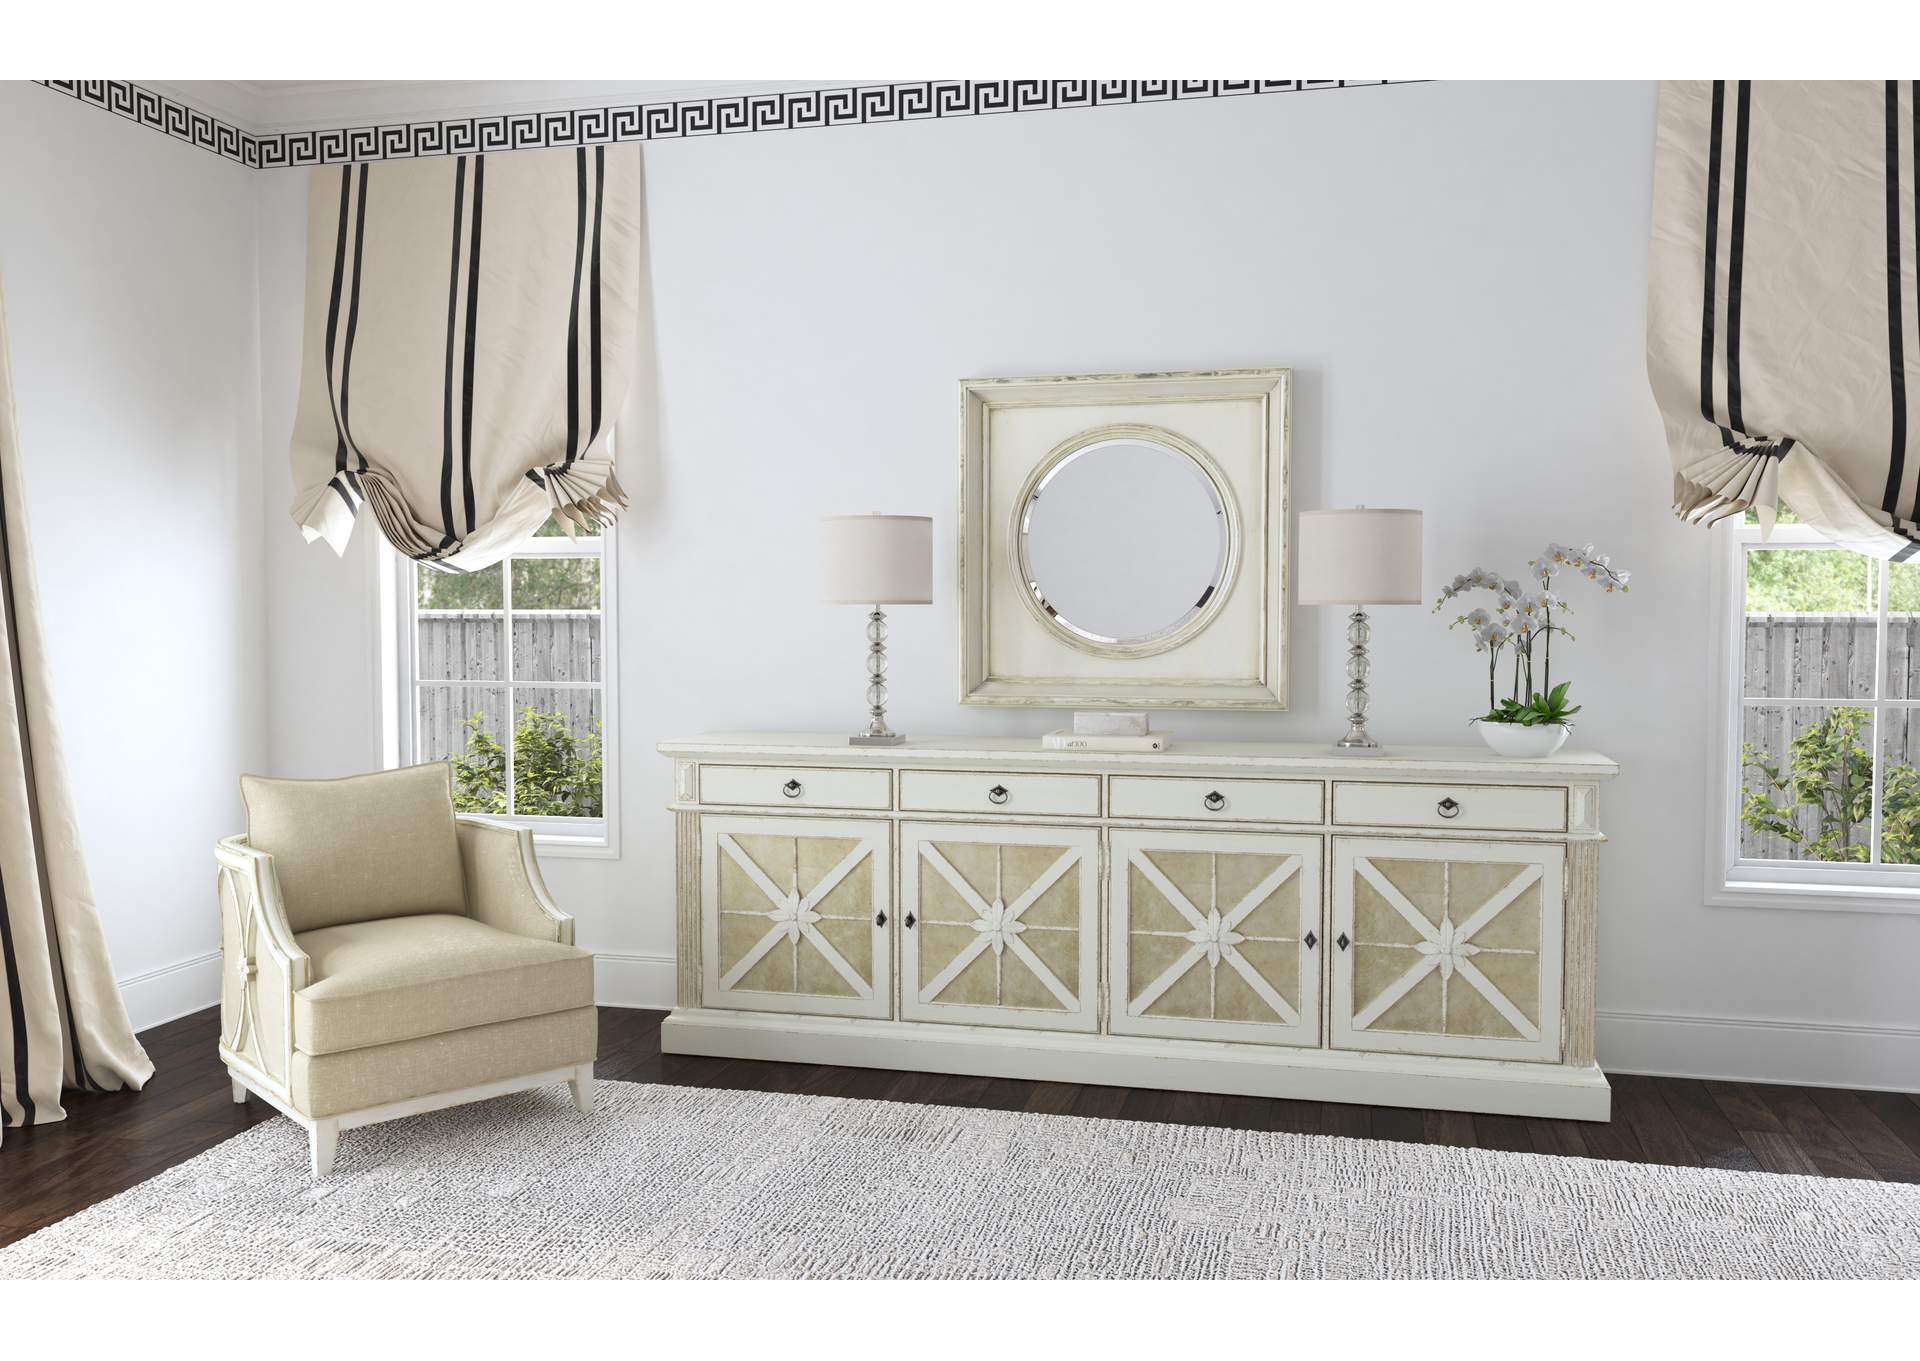 Sanctuary Mariette Lounge Chair,Hooker Furniture